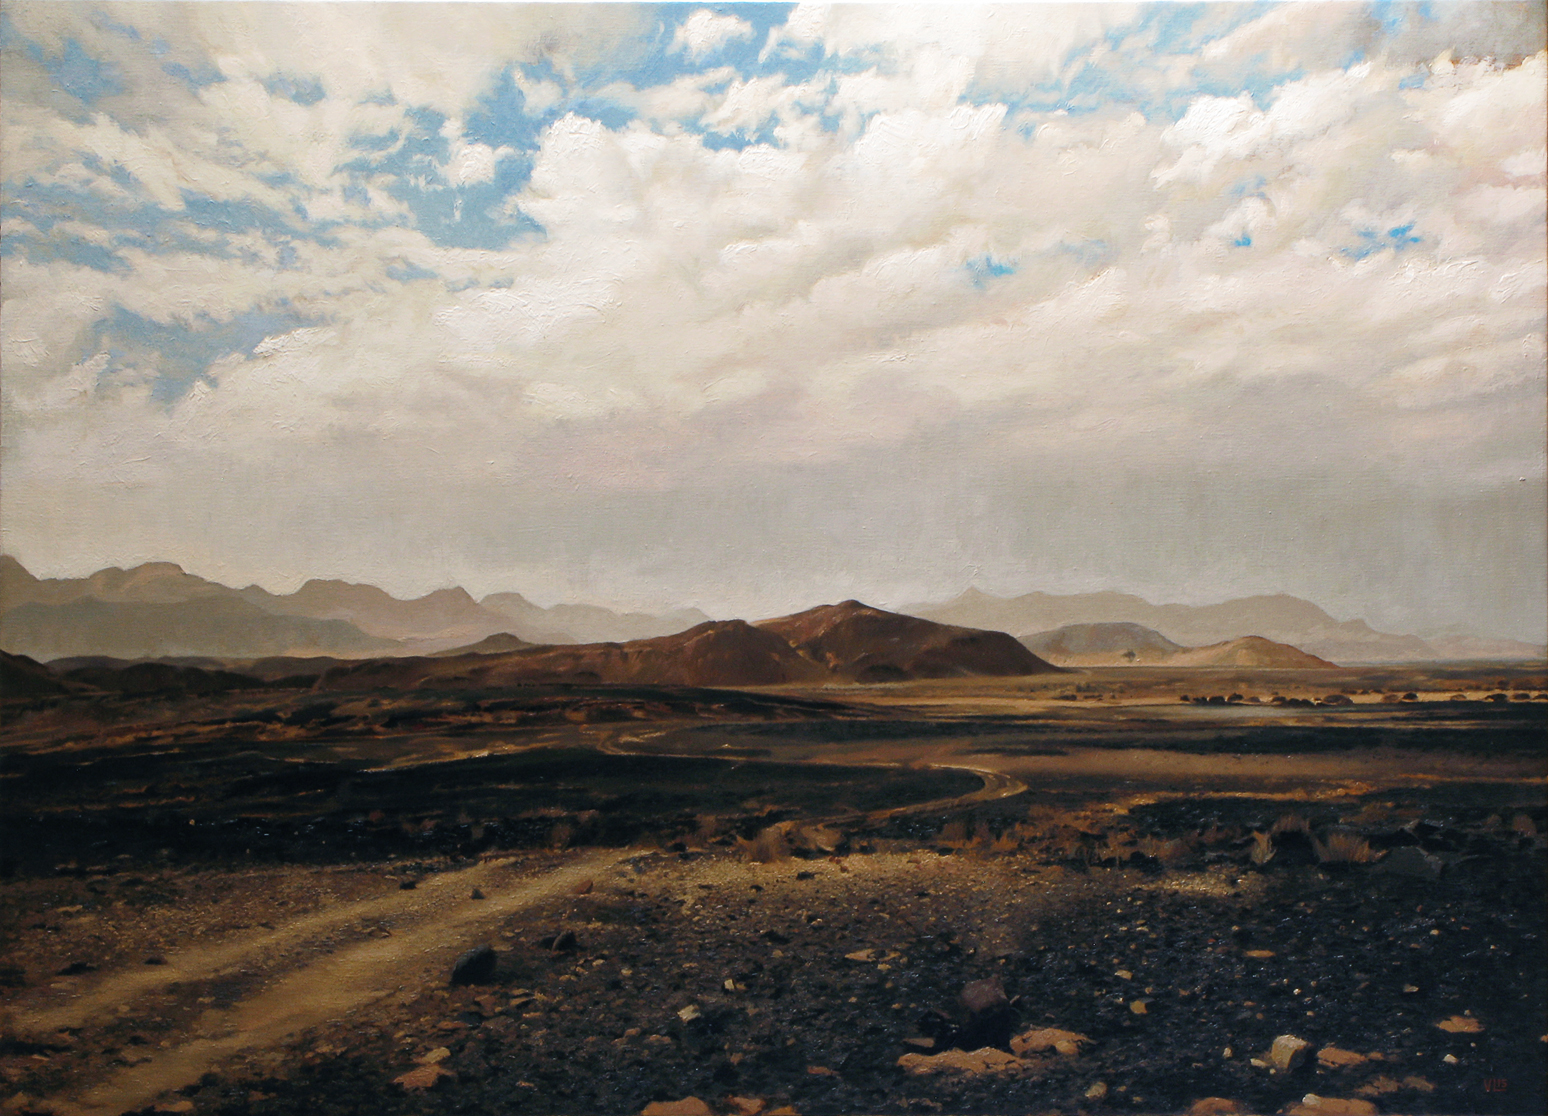 Damaraland, Namibia, 2015, 125 x 90, oil on canvas (medium)